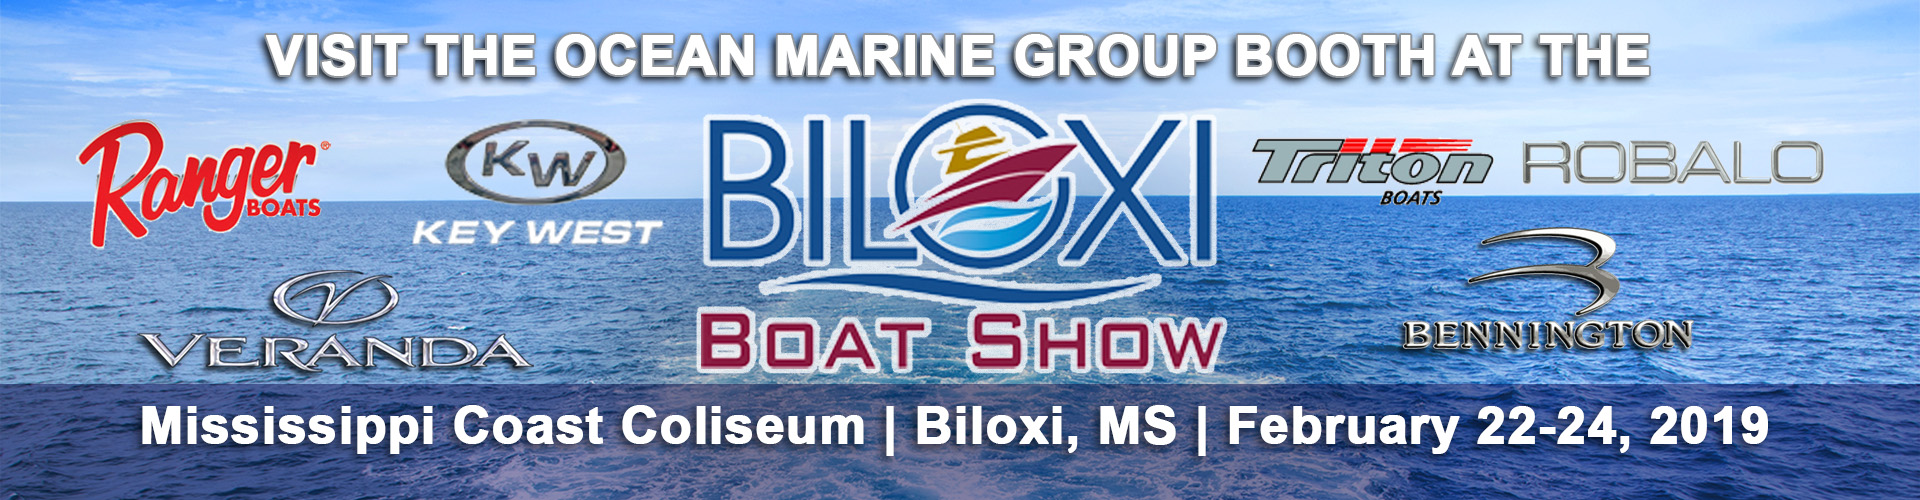 Biloxi Boat Show Ocean Marine Group Ocean Springs Mississippi